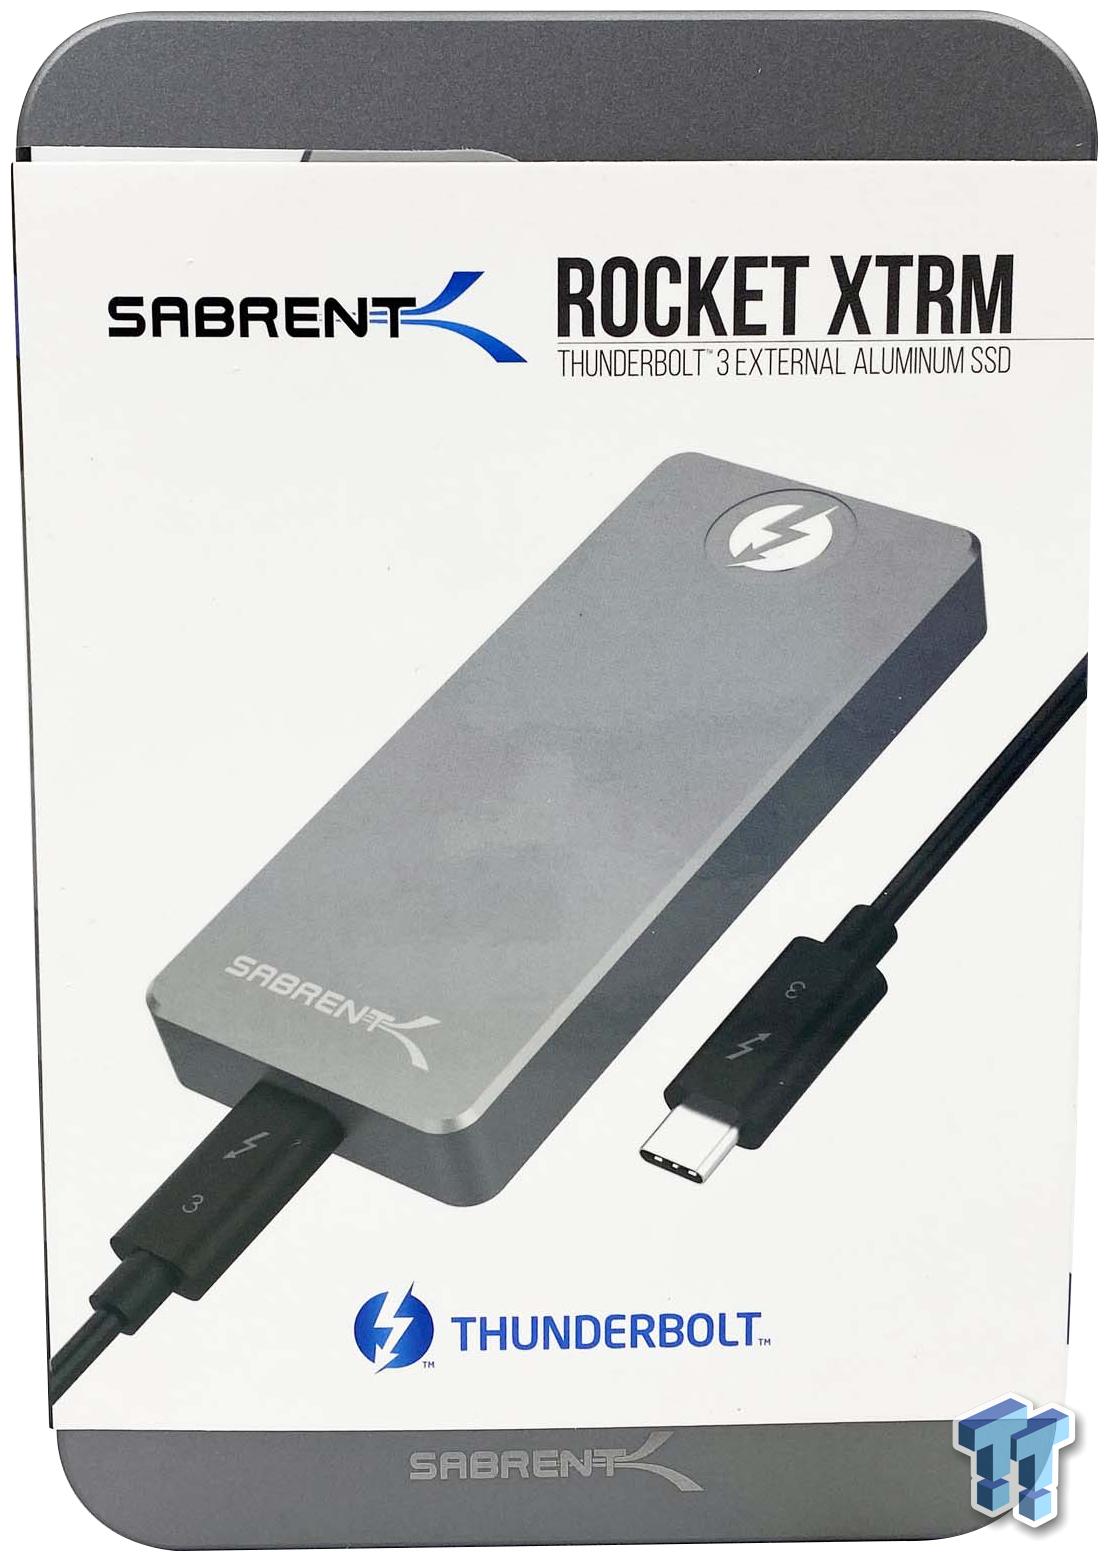 Sabrent Rocket XTRM Portable Thunderbolt 3 SSD Review